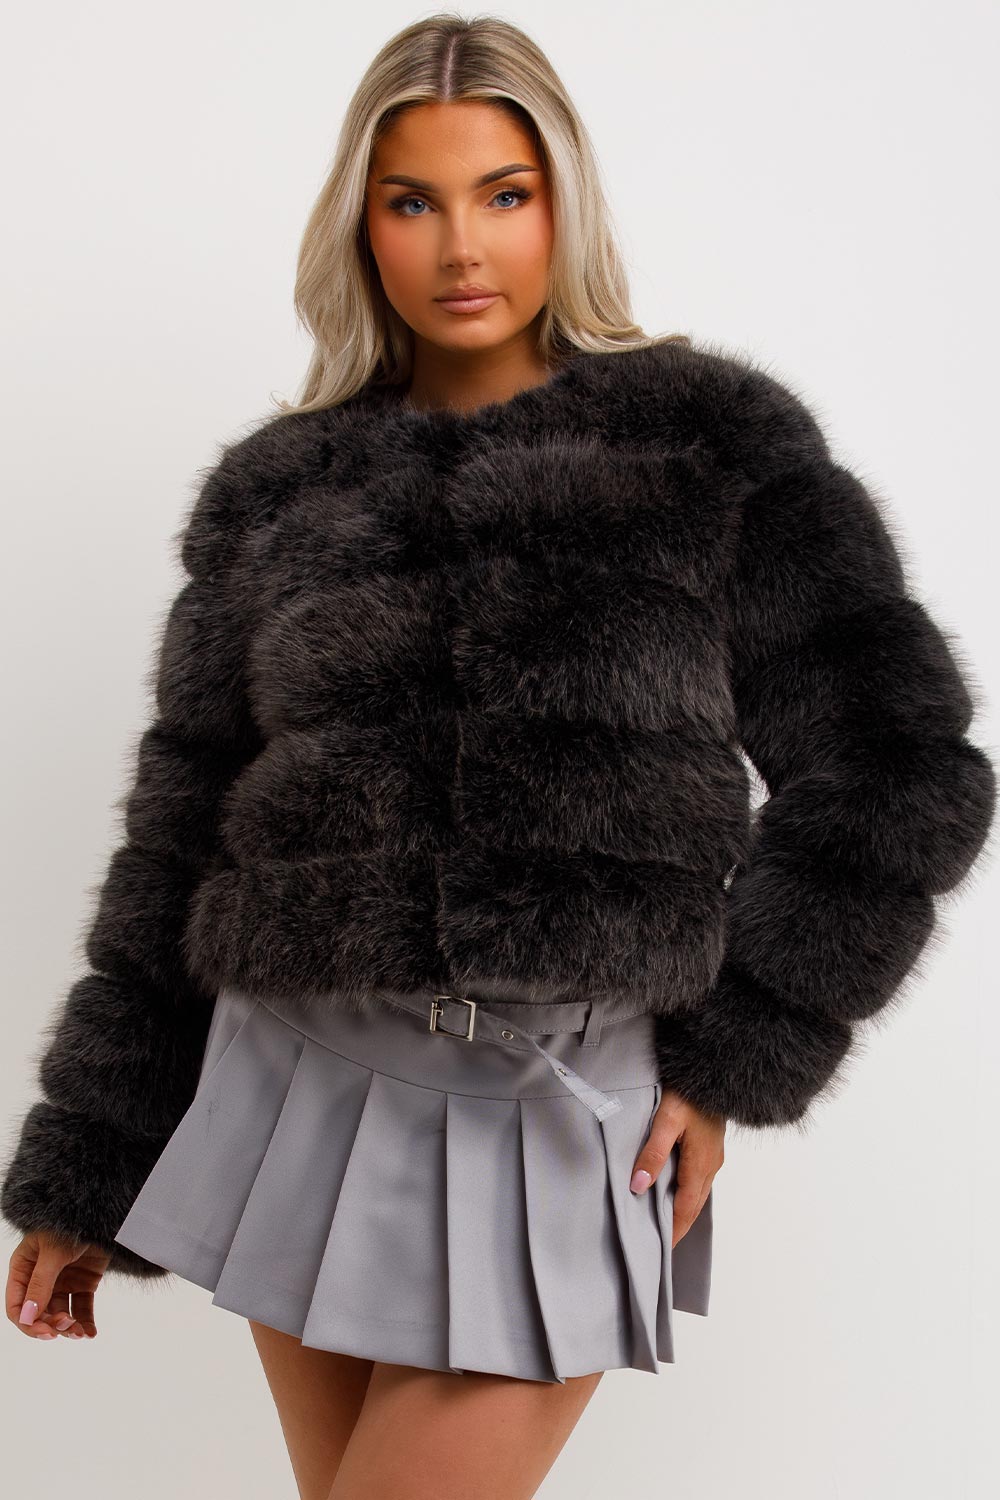 faux fur bubble coat cropped charcoal grey